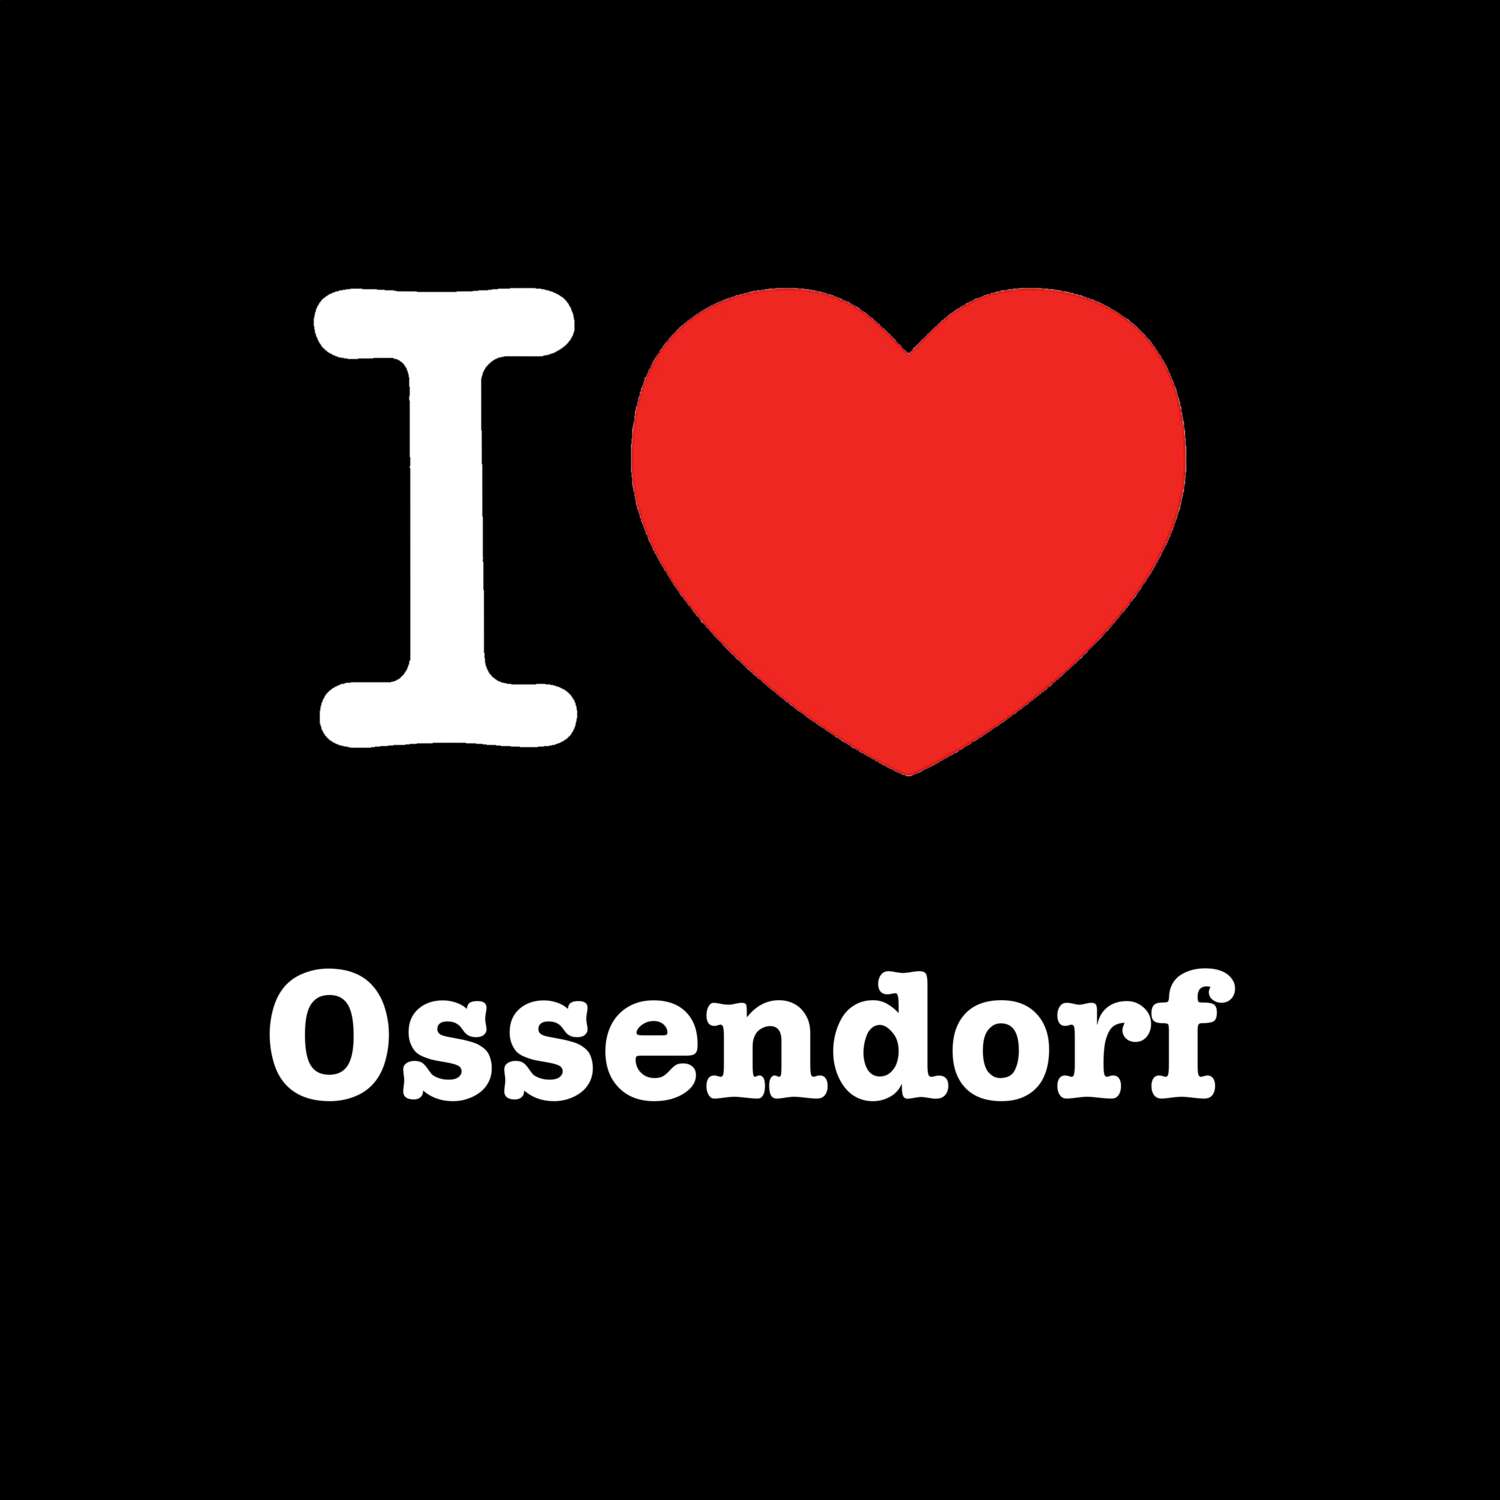 Ossendorf T-Shirt »I love«